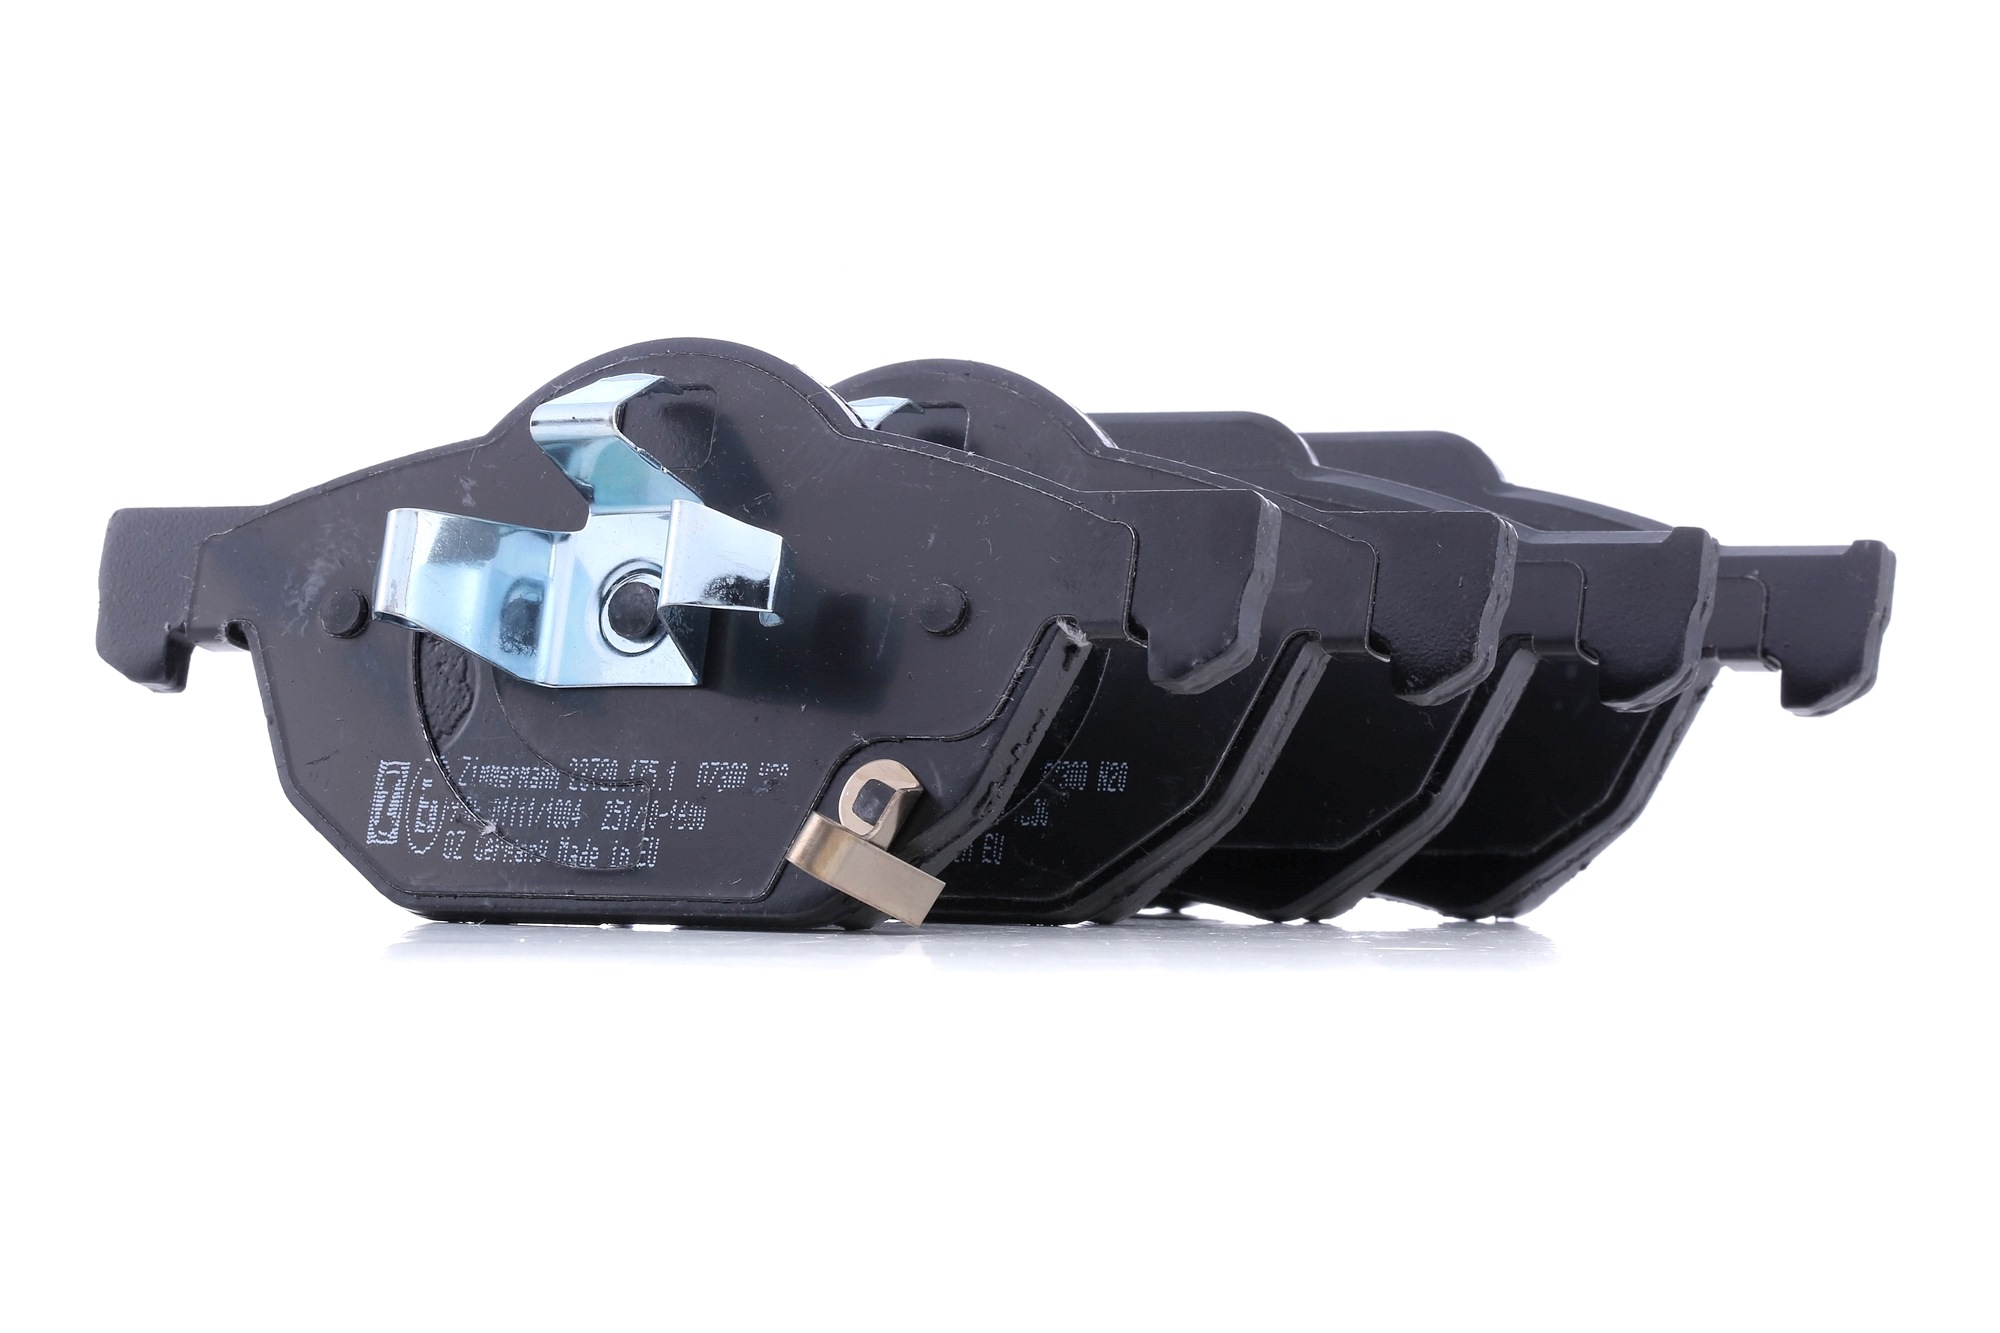 Honda INTEGRA Racing brake pads 7789170 ZIMMERMANN 23720.175.1 online buy